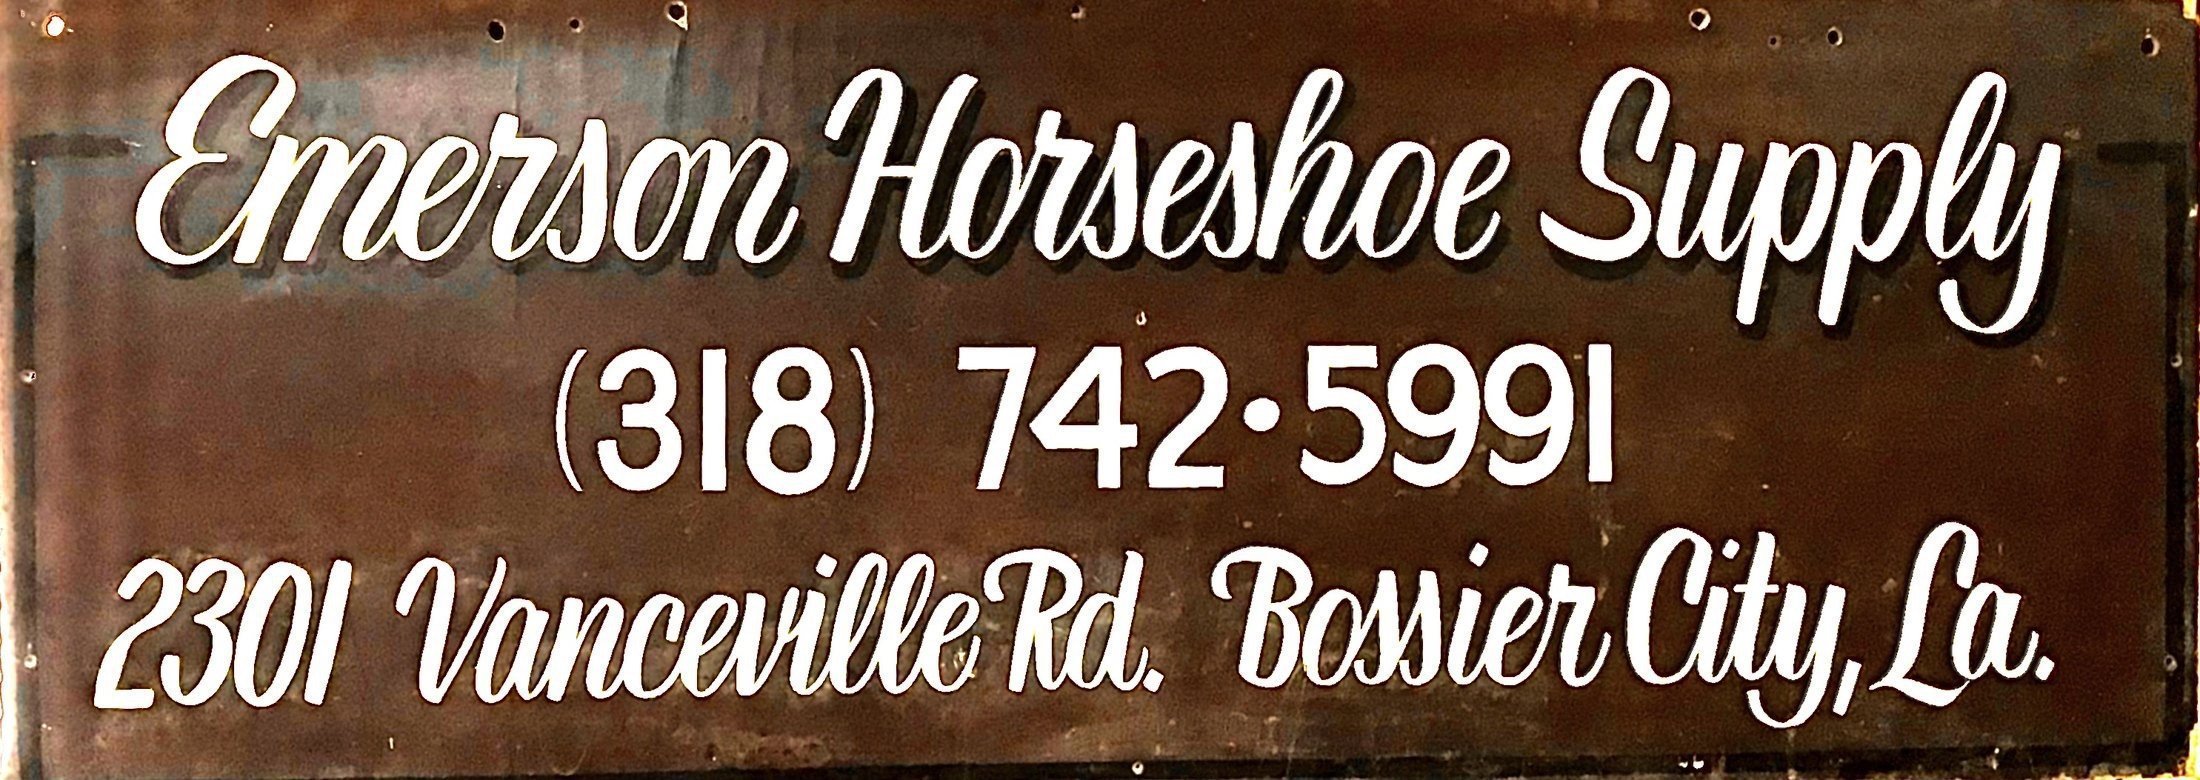 Hanton Horseshoes — Meader Supply Corp.